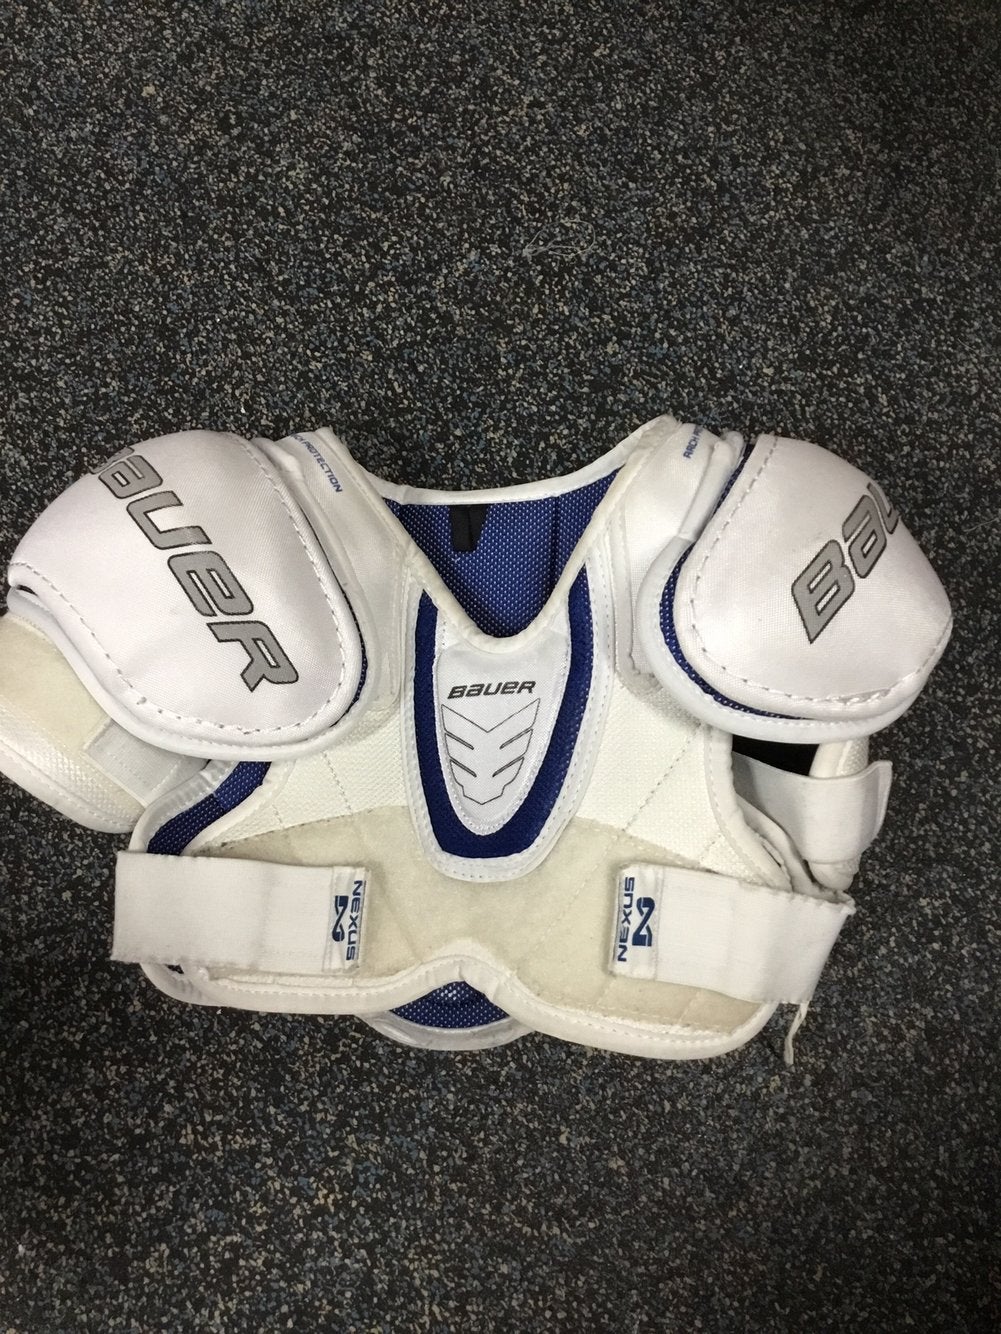 Junior Small *New* Bauer Nexus Elevate Hockey Shoulder Pads 